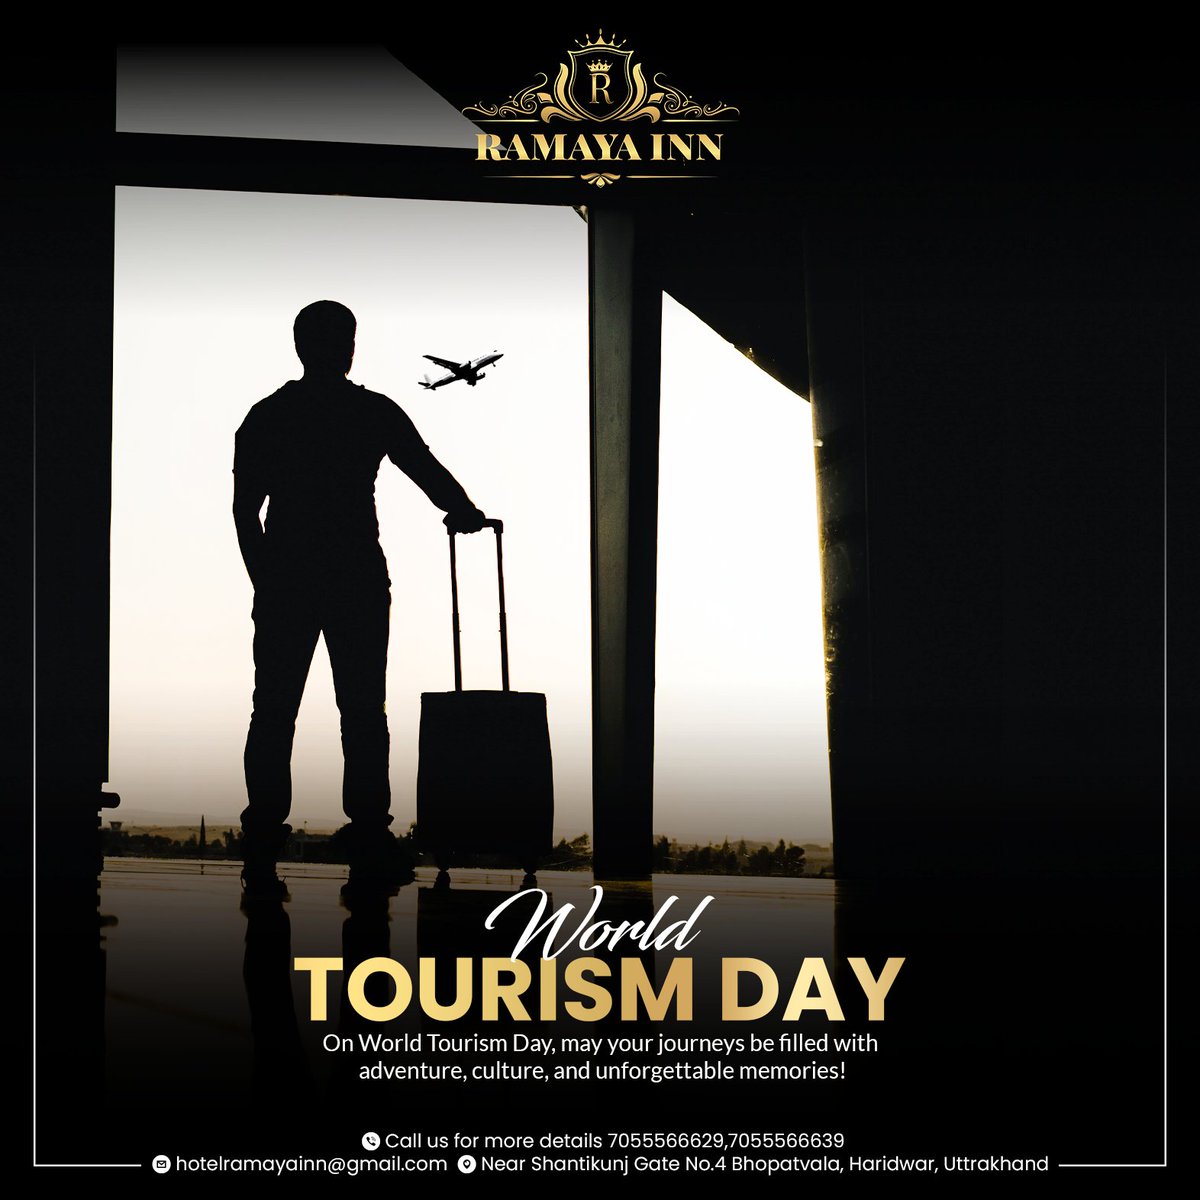 Tourism: Where dreams meet destinations. Cheers to #WorldTourismDay!

Contact Us :
📧 : hotelramayainn@gmail.com
📞 : 7055566629, 7055566639
📍 : Near Shantikunj Gate No.4 Bhopatvala, Haridwar, Uttrakhand

#ramayainn #hotelramayainn #haridwar #uttrakhandtourism #WorldTourismDay